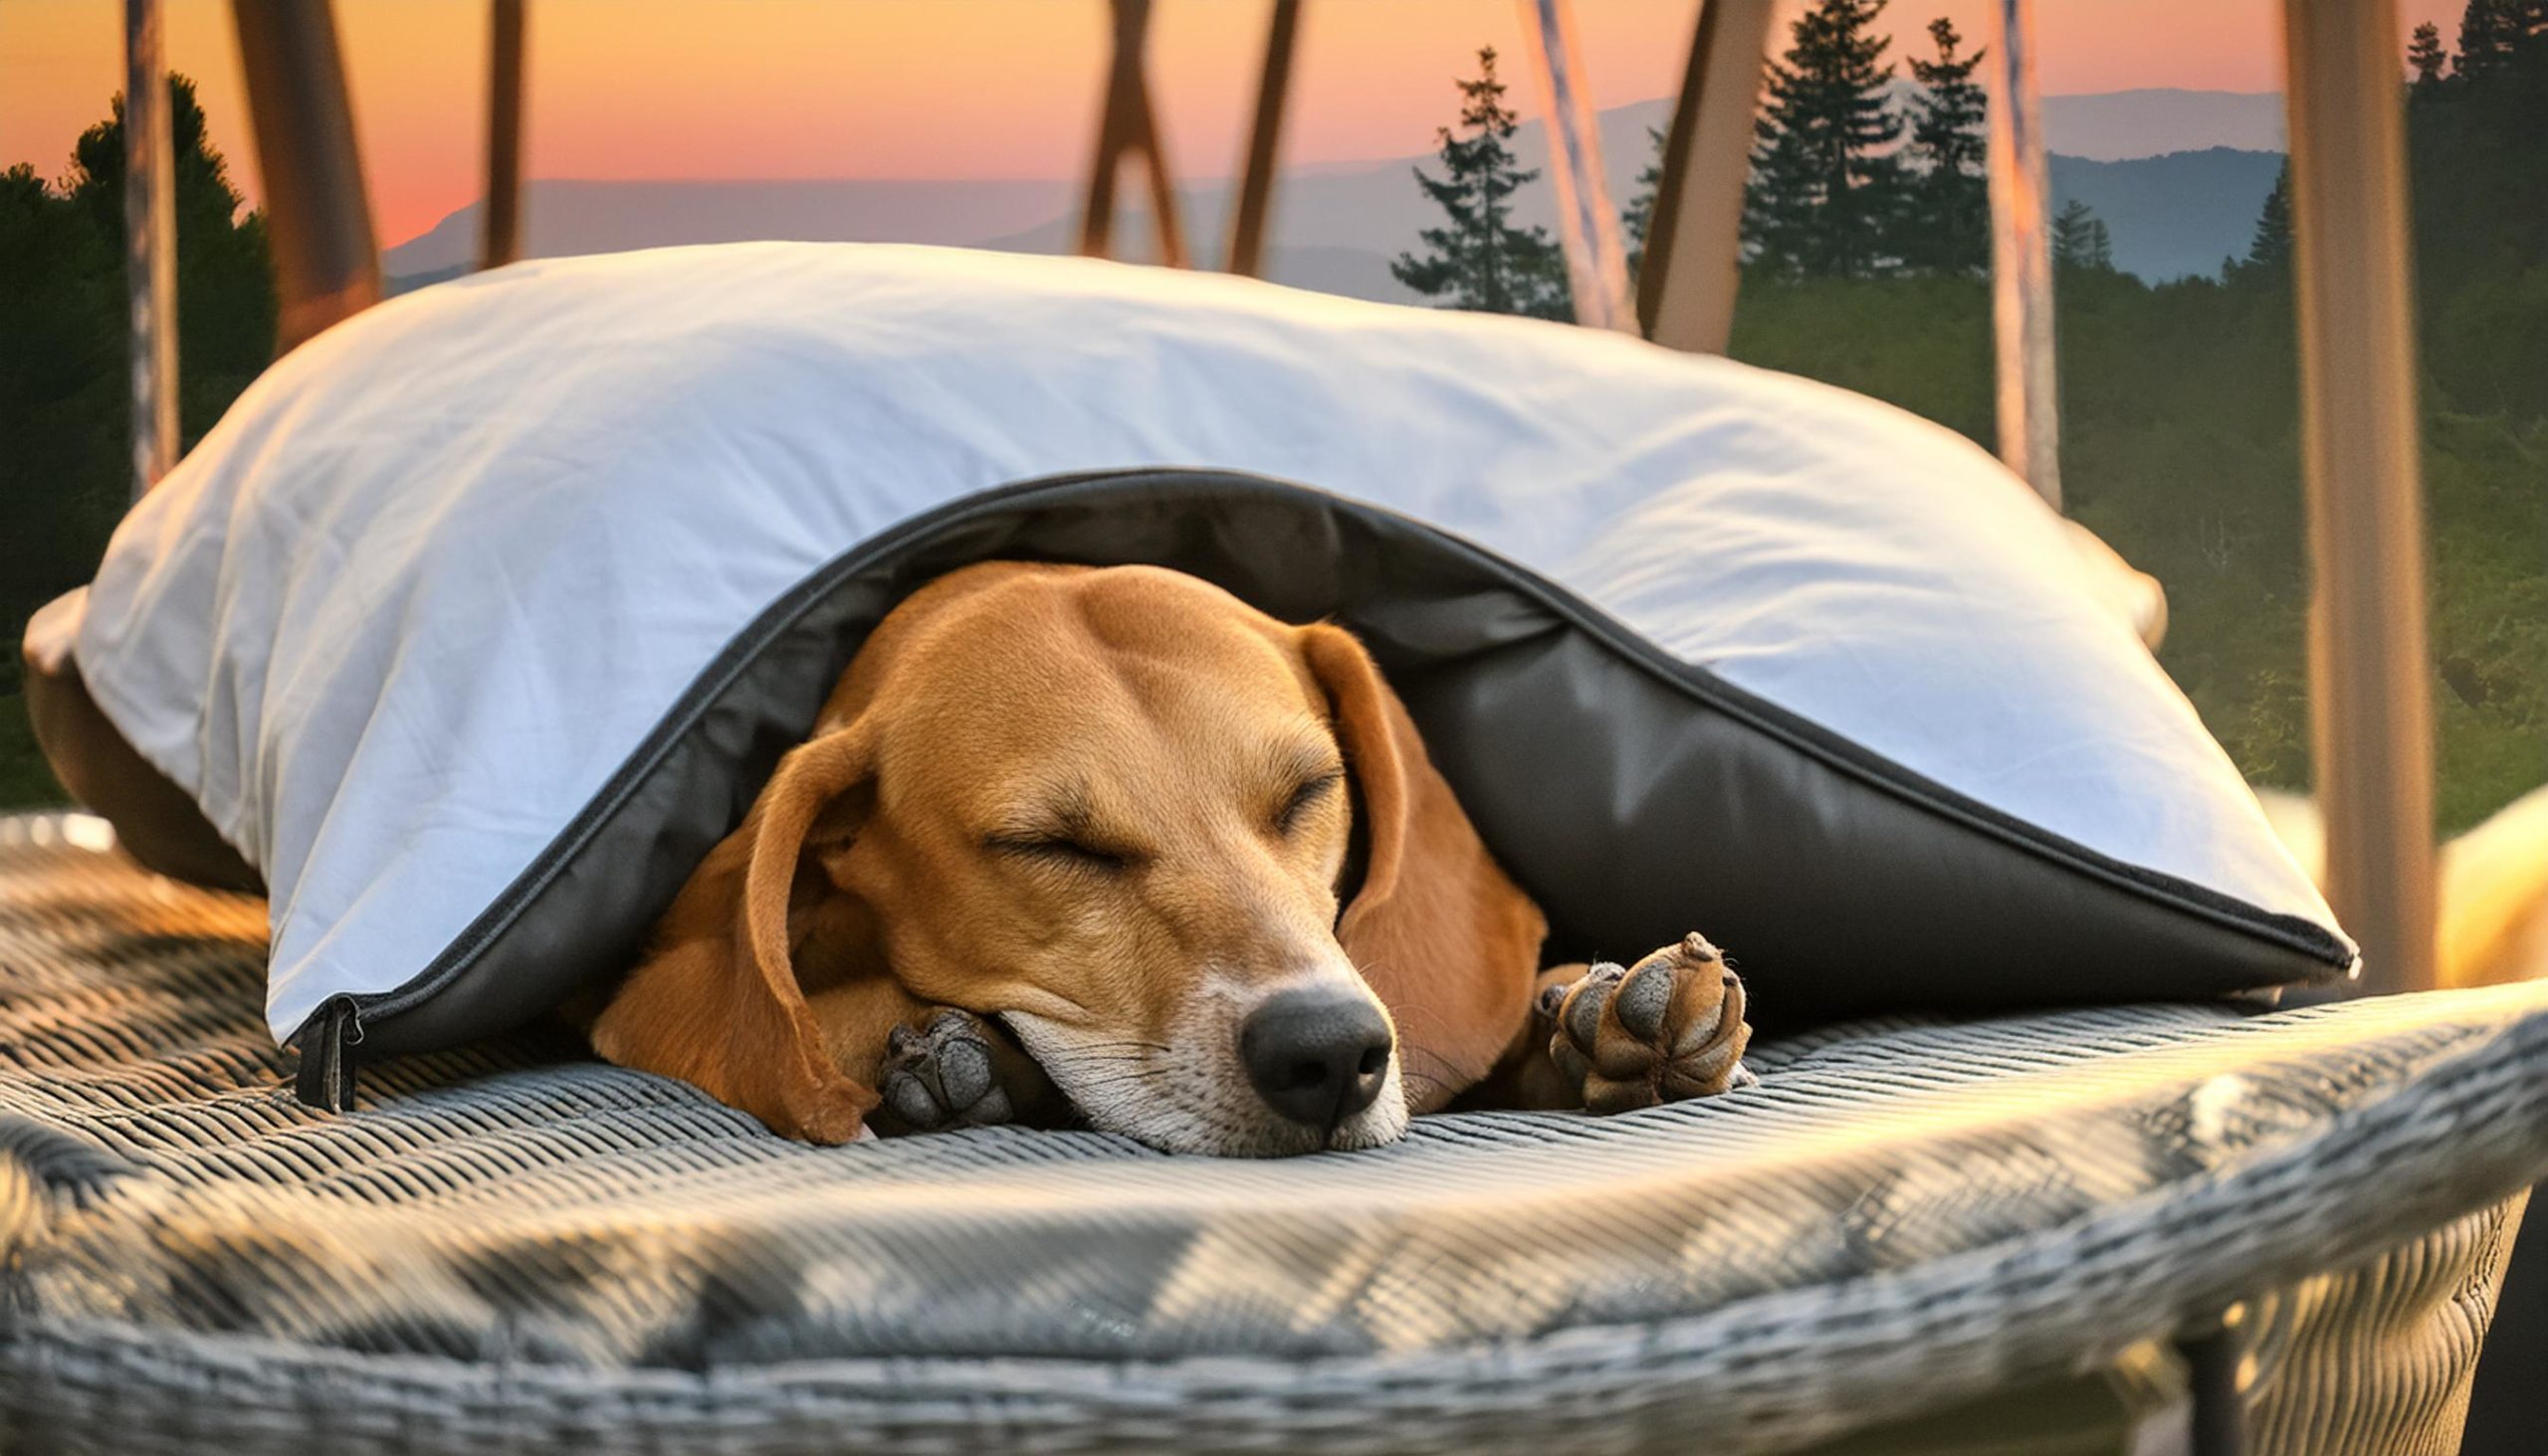 hygenhund slaapt onder een kussen